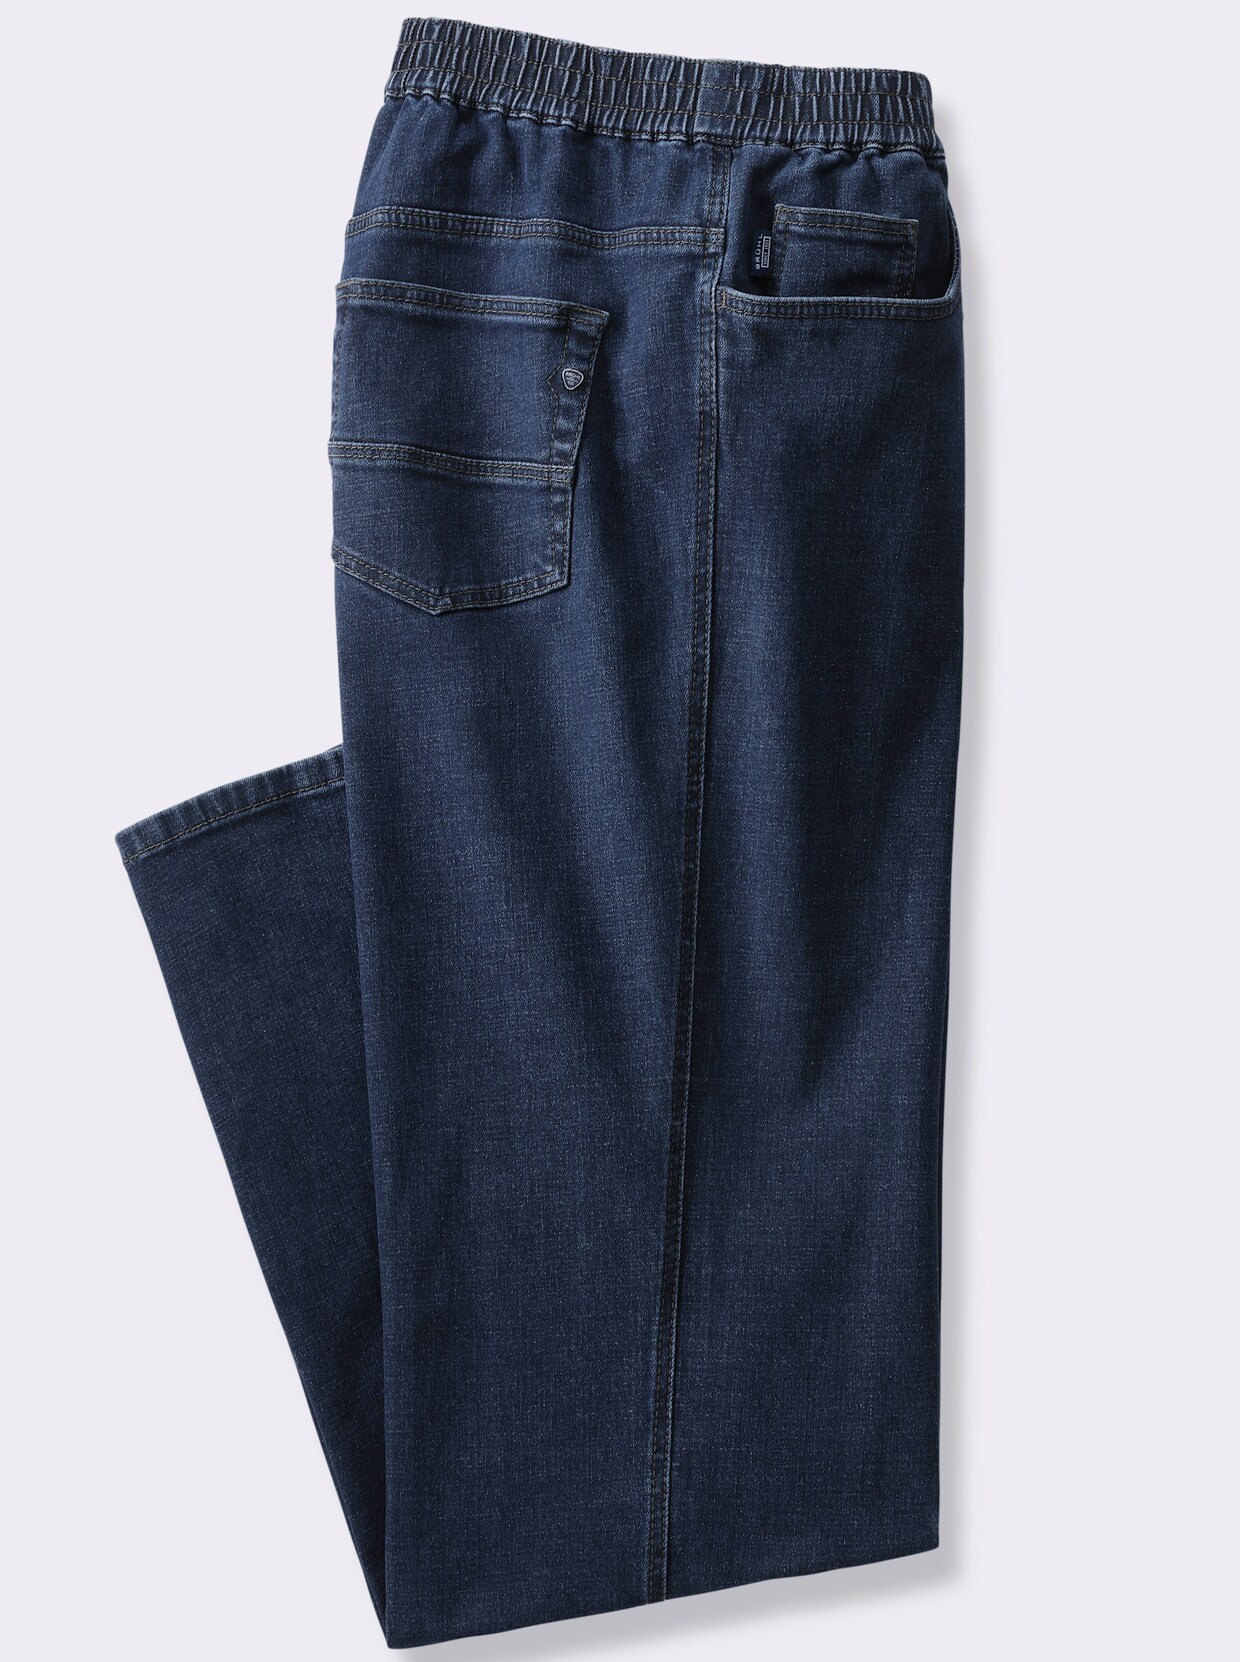 Brühl Jeans - blue-stonewashed